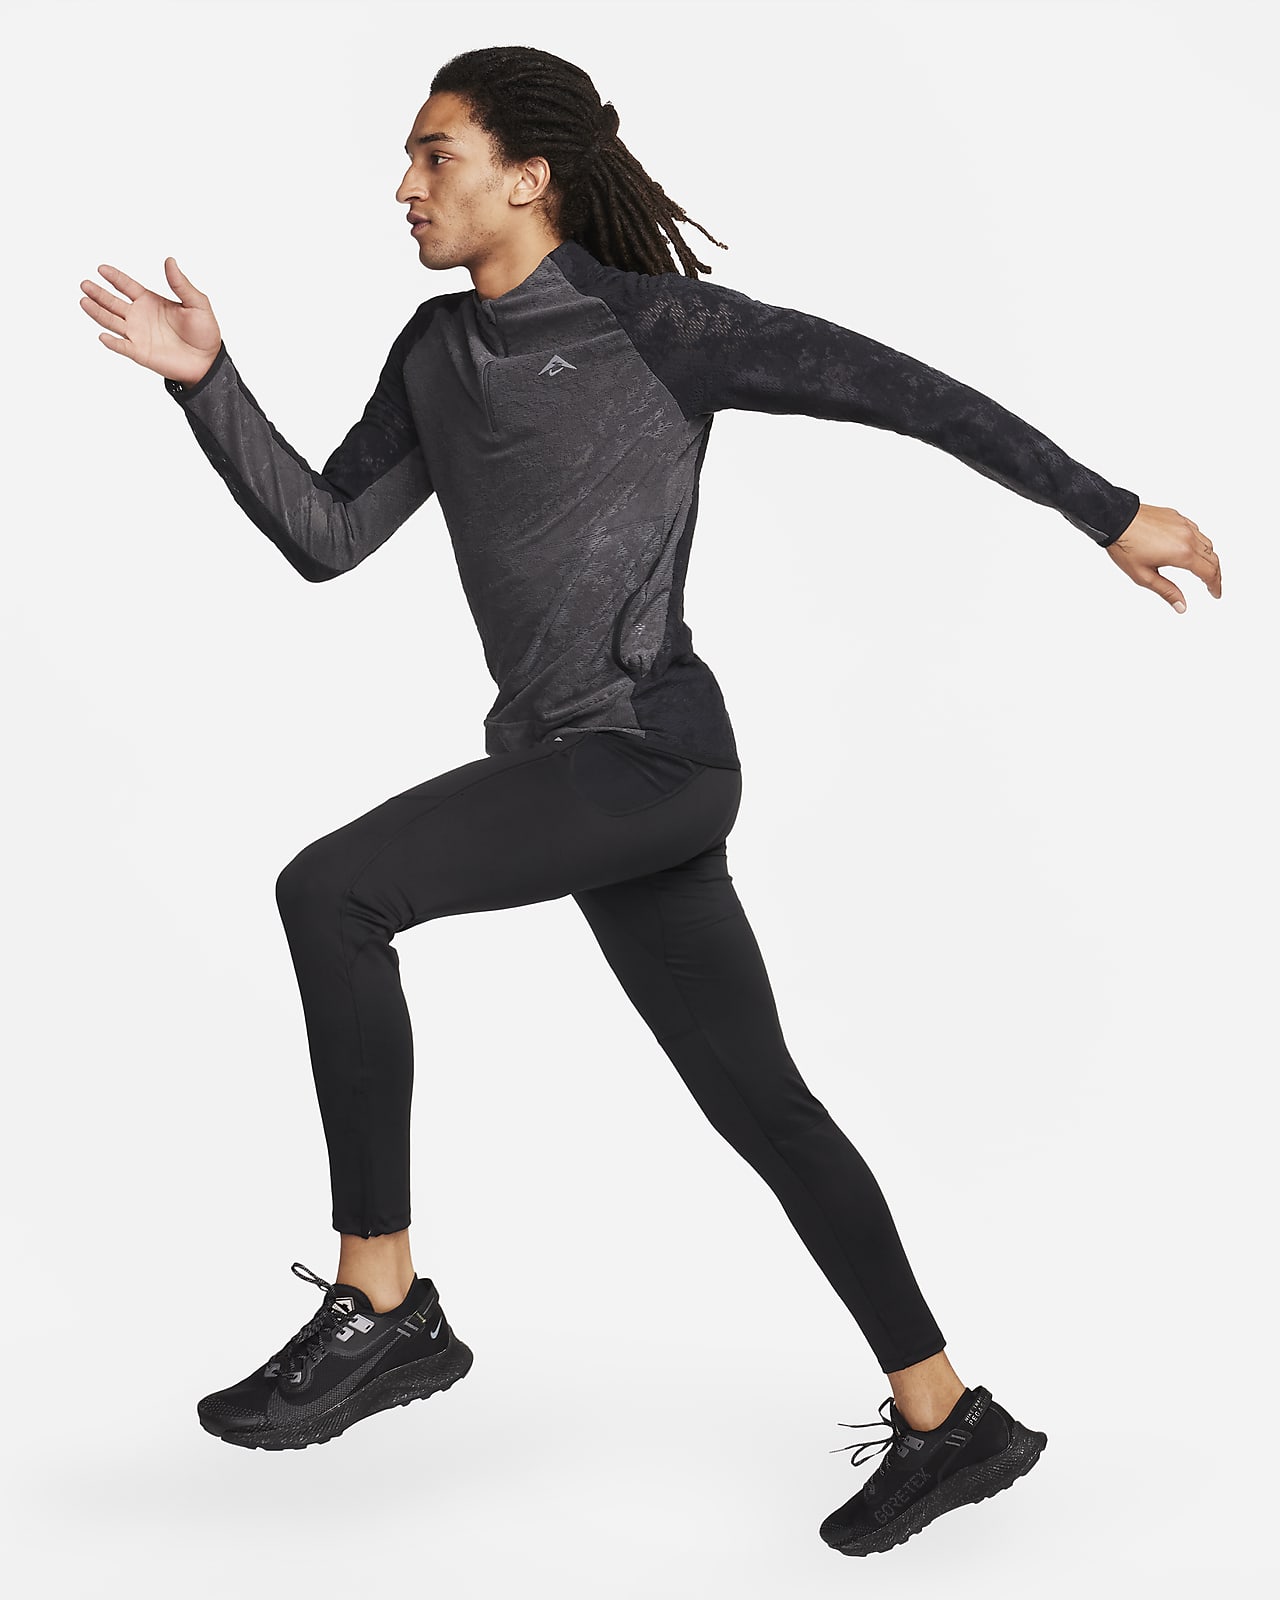  Nike Lunar Ray Men's Winterized Running Tights (US